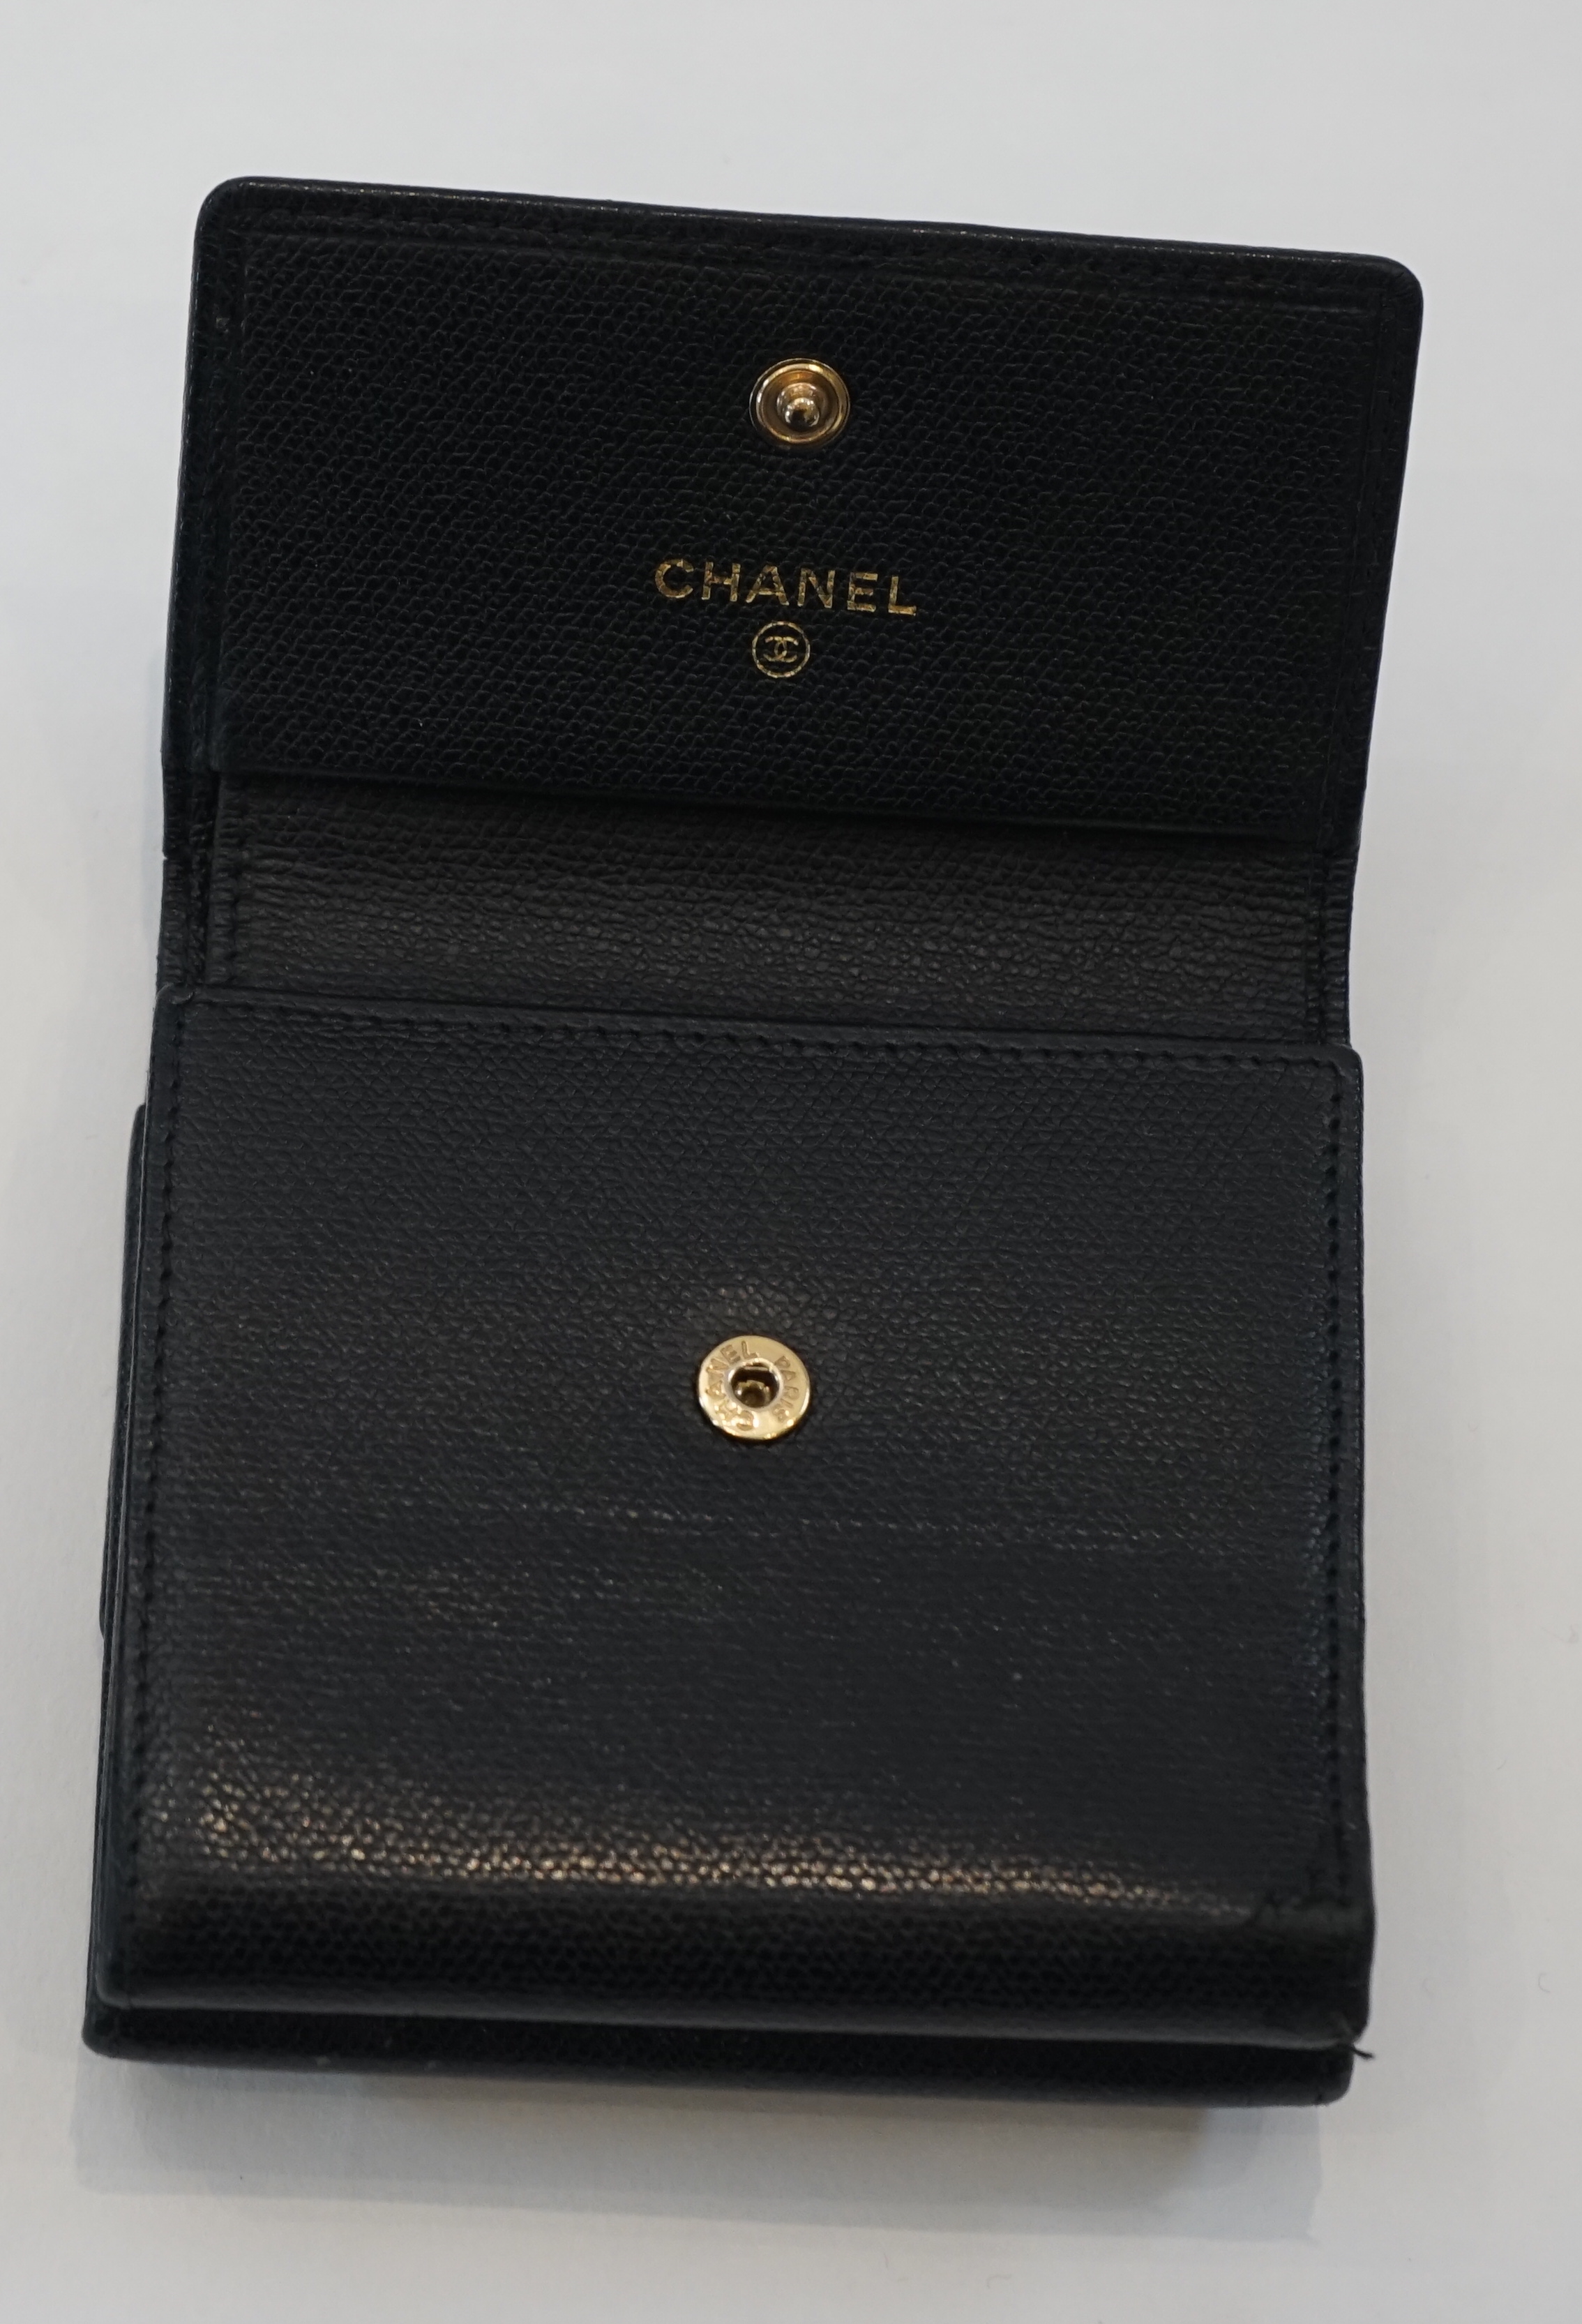 A Chanel black leather folded wallet width 10cm, depth 2cm, height 9.5cm